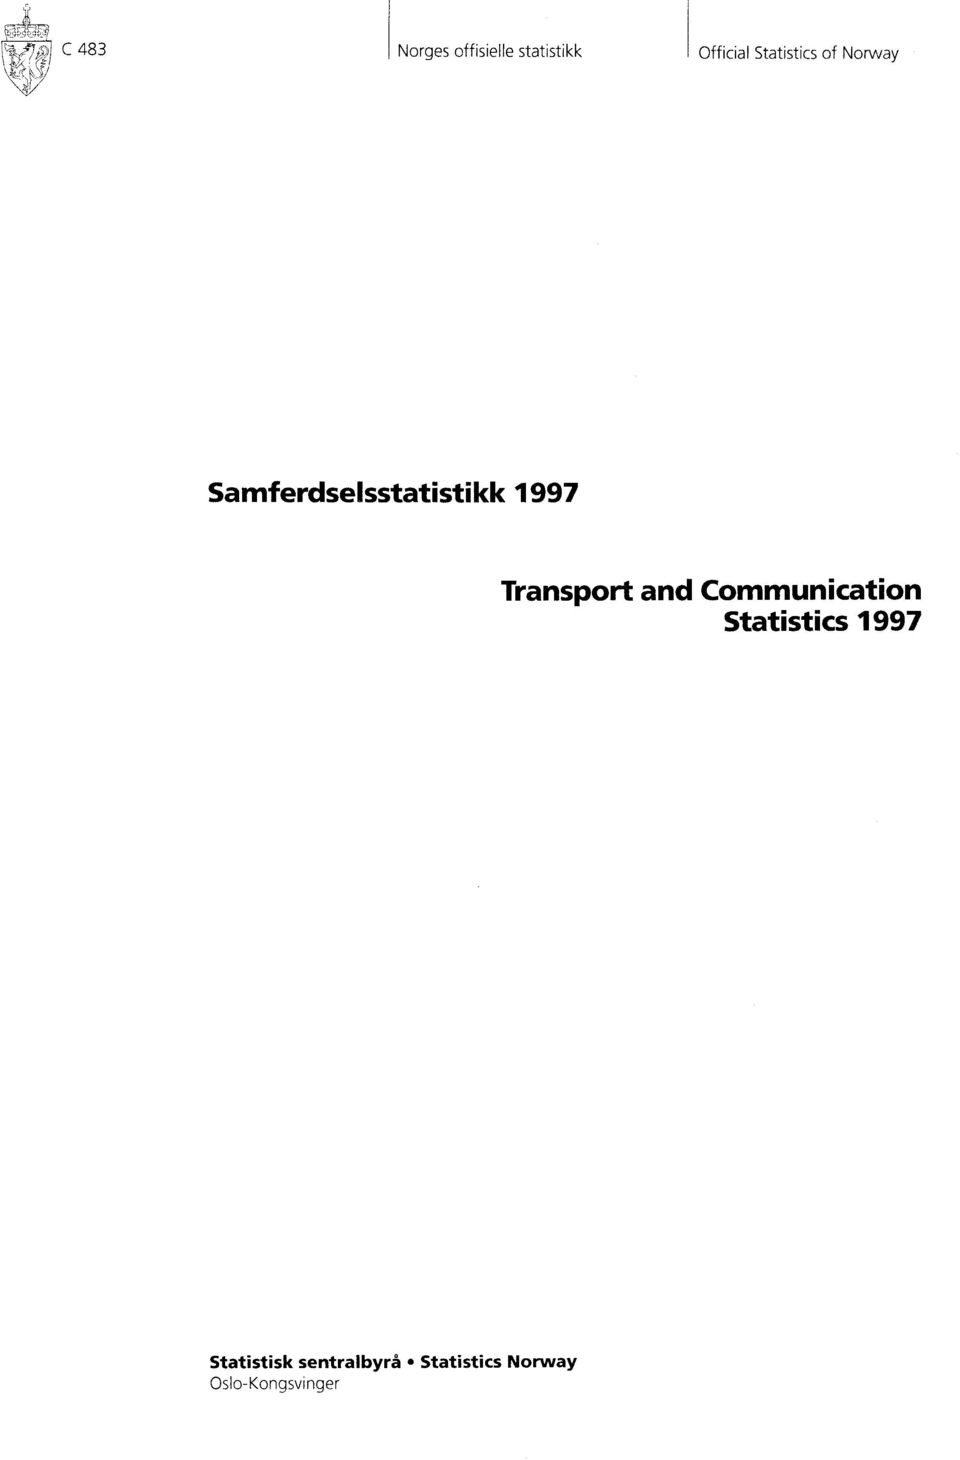 Transport and Communication Statistics 1997